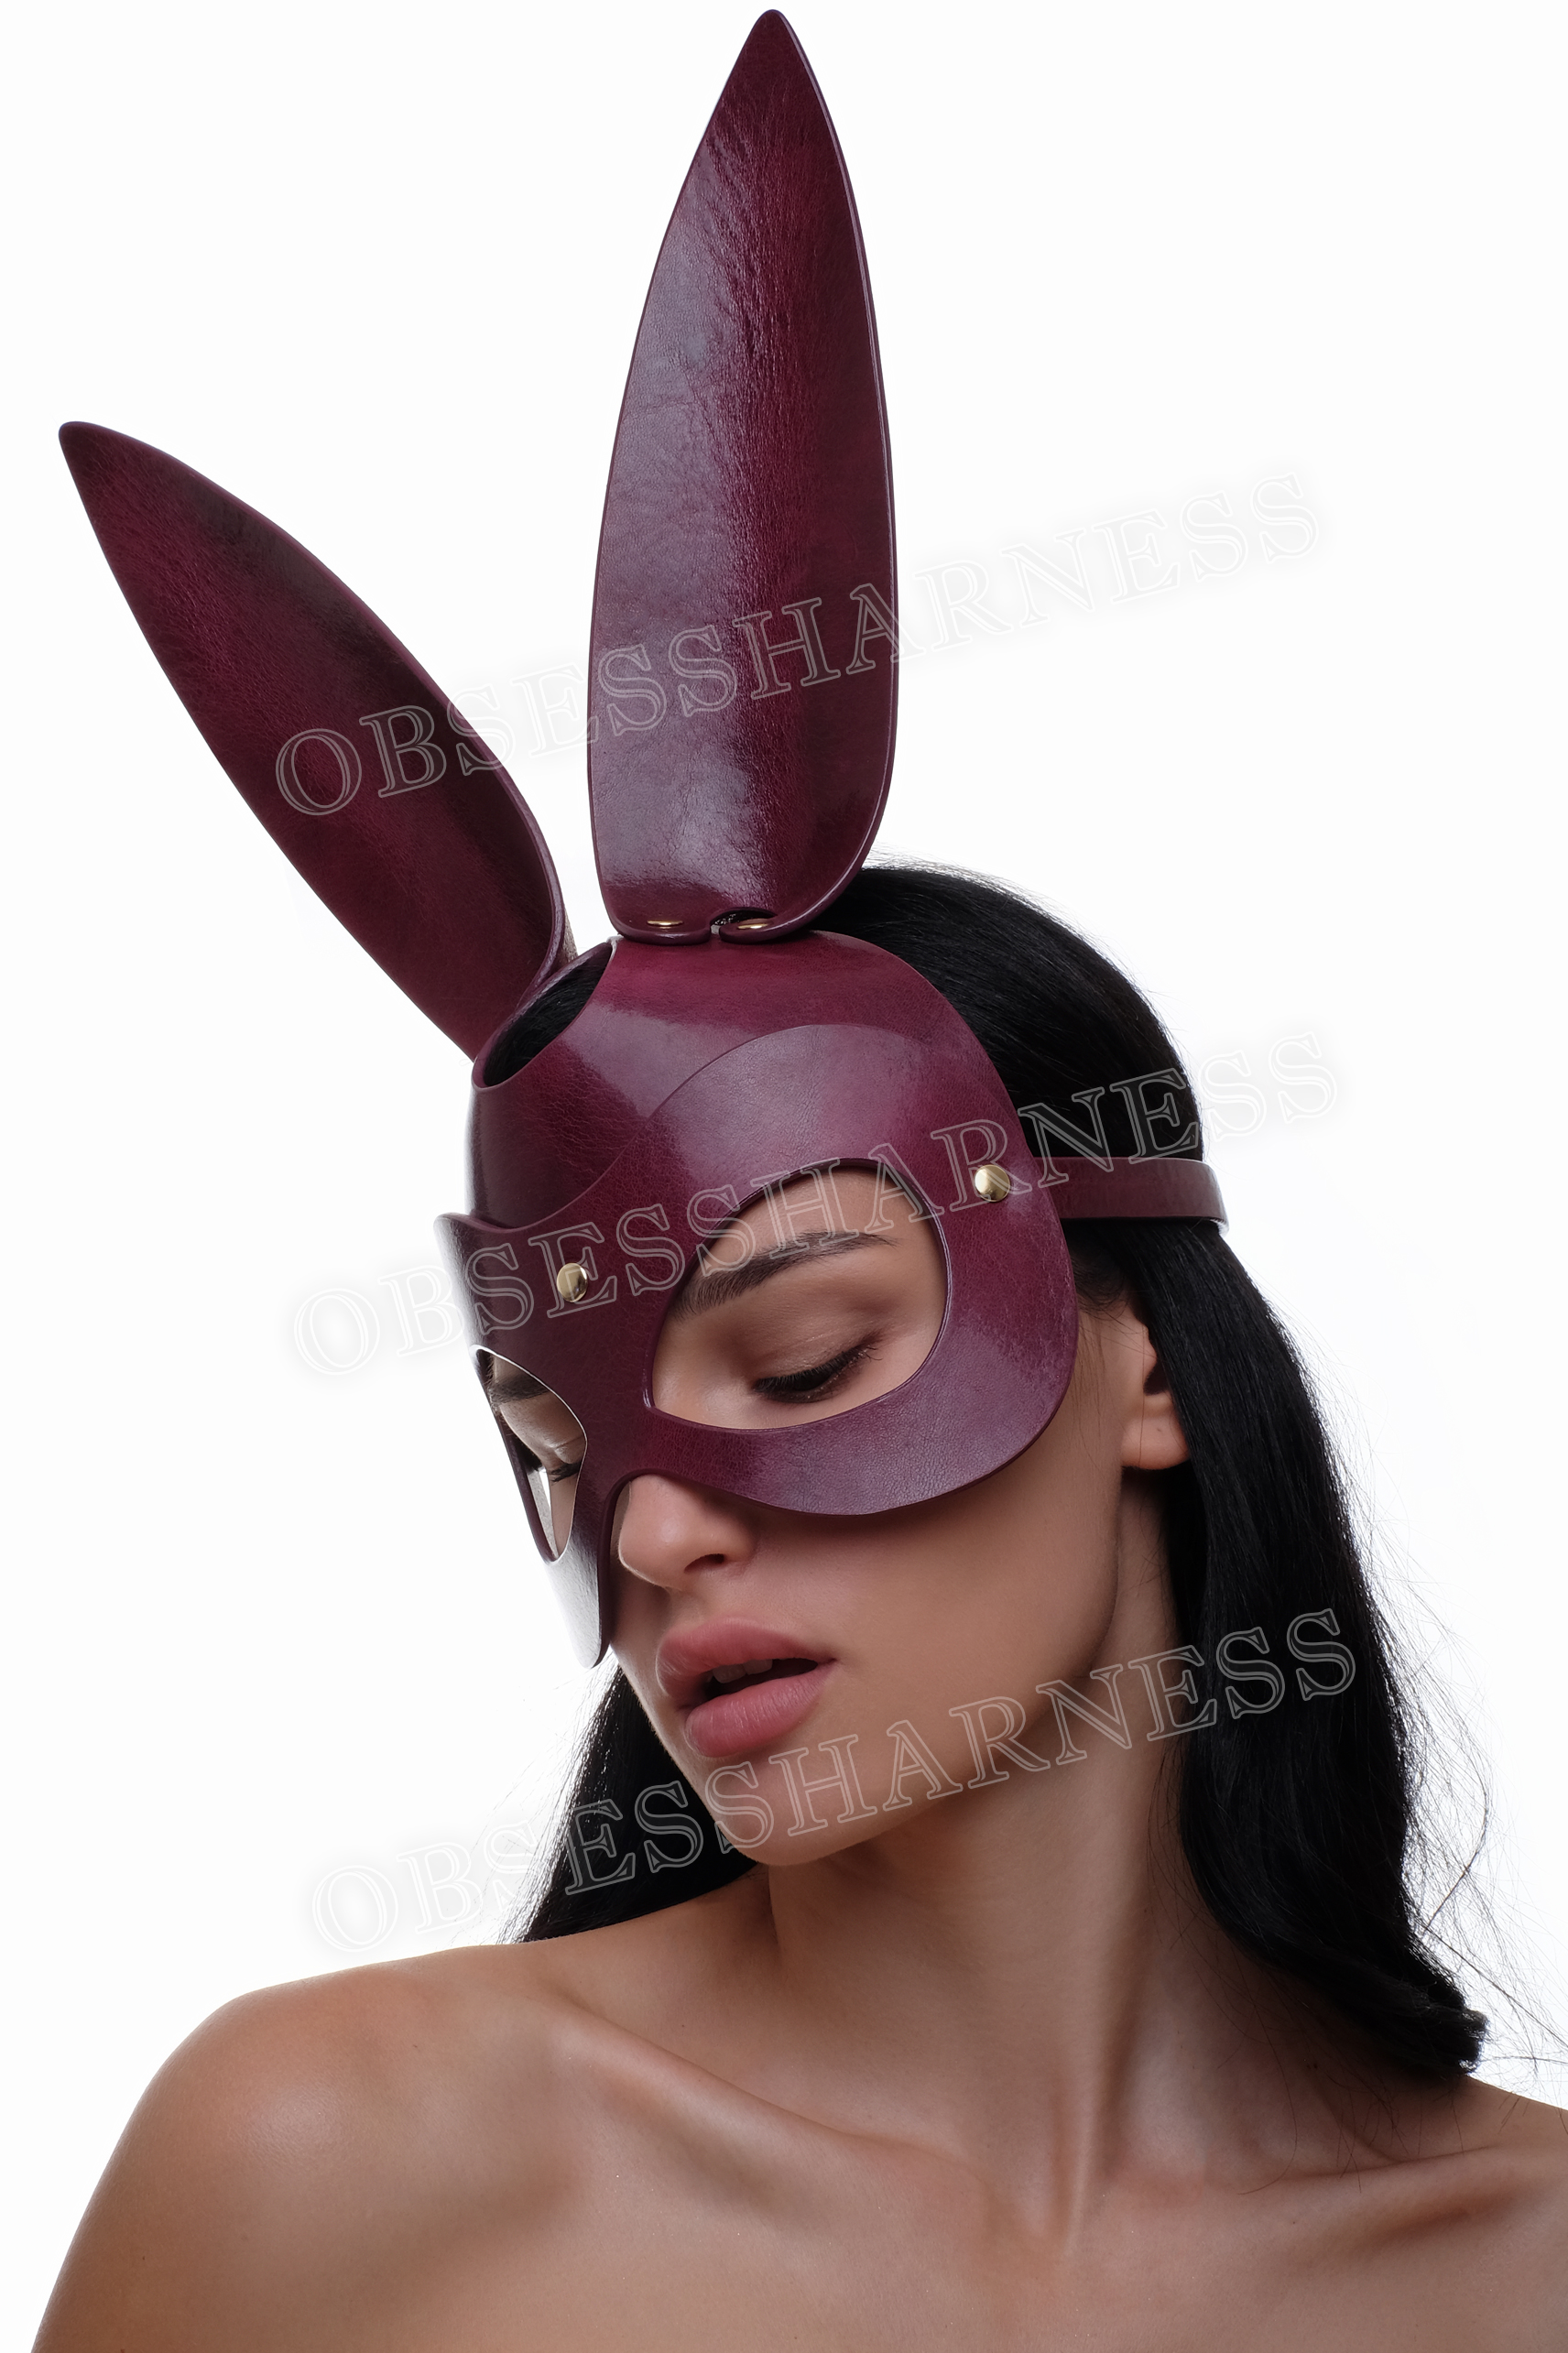 Rabbit mask leather purple - Obsessharness